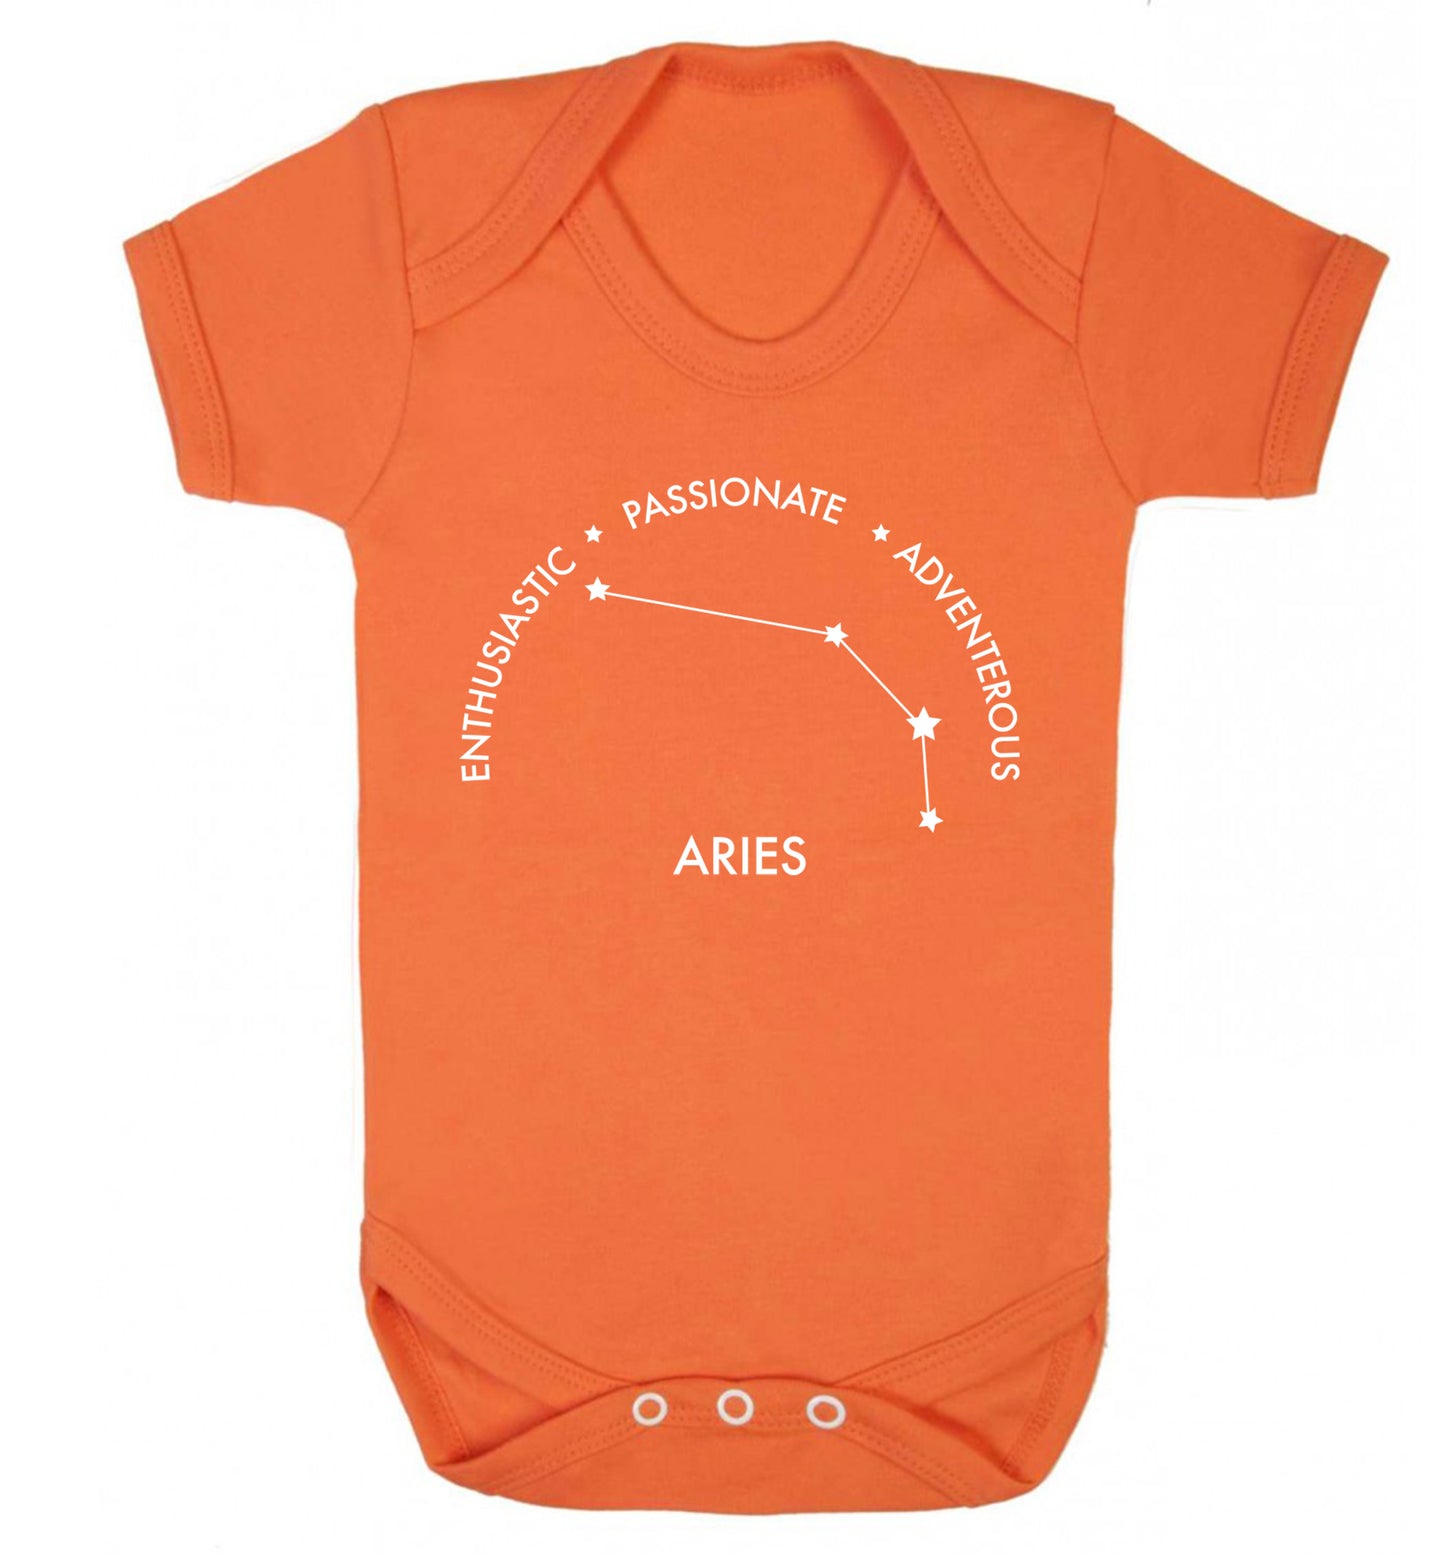 Aries enthusiastic | passionate | adventerous Baby Vest orange 18-24 months